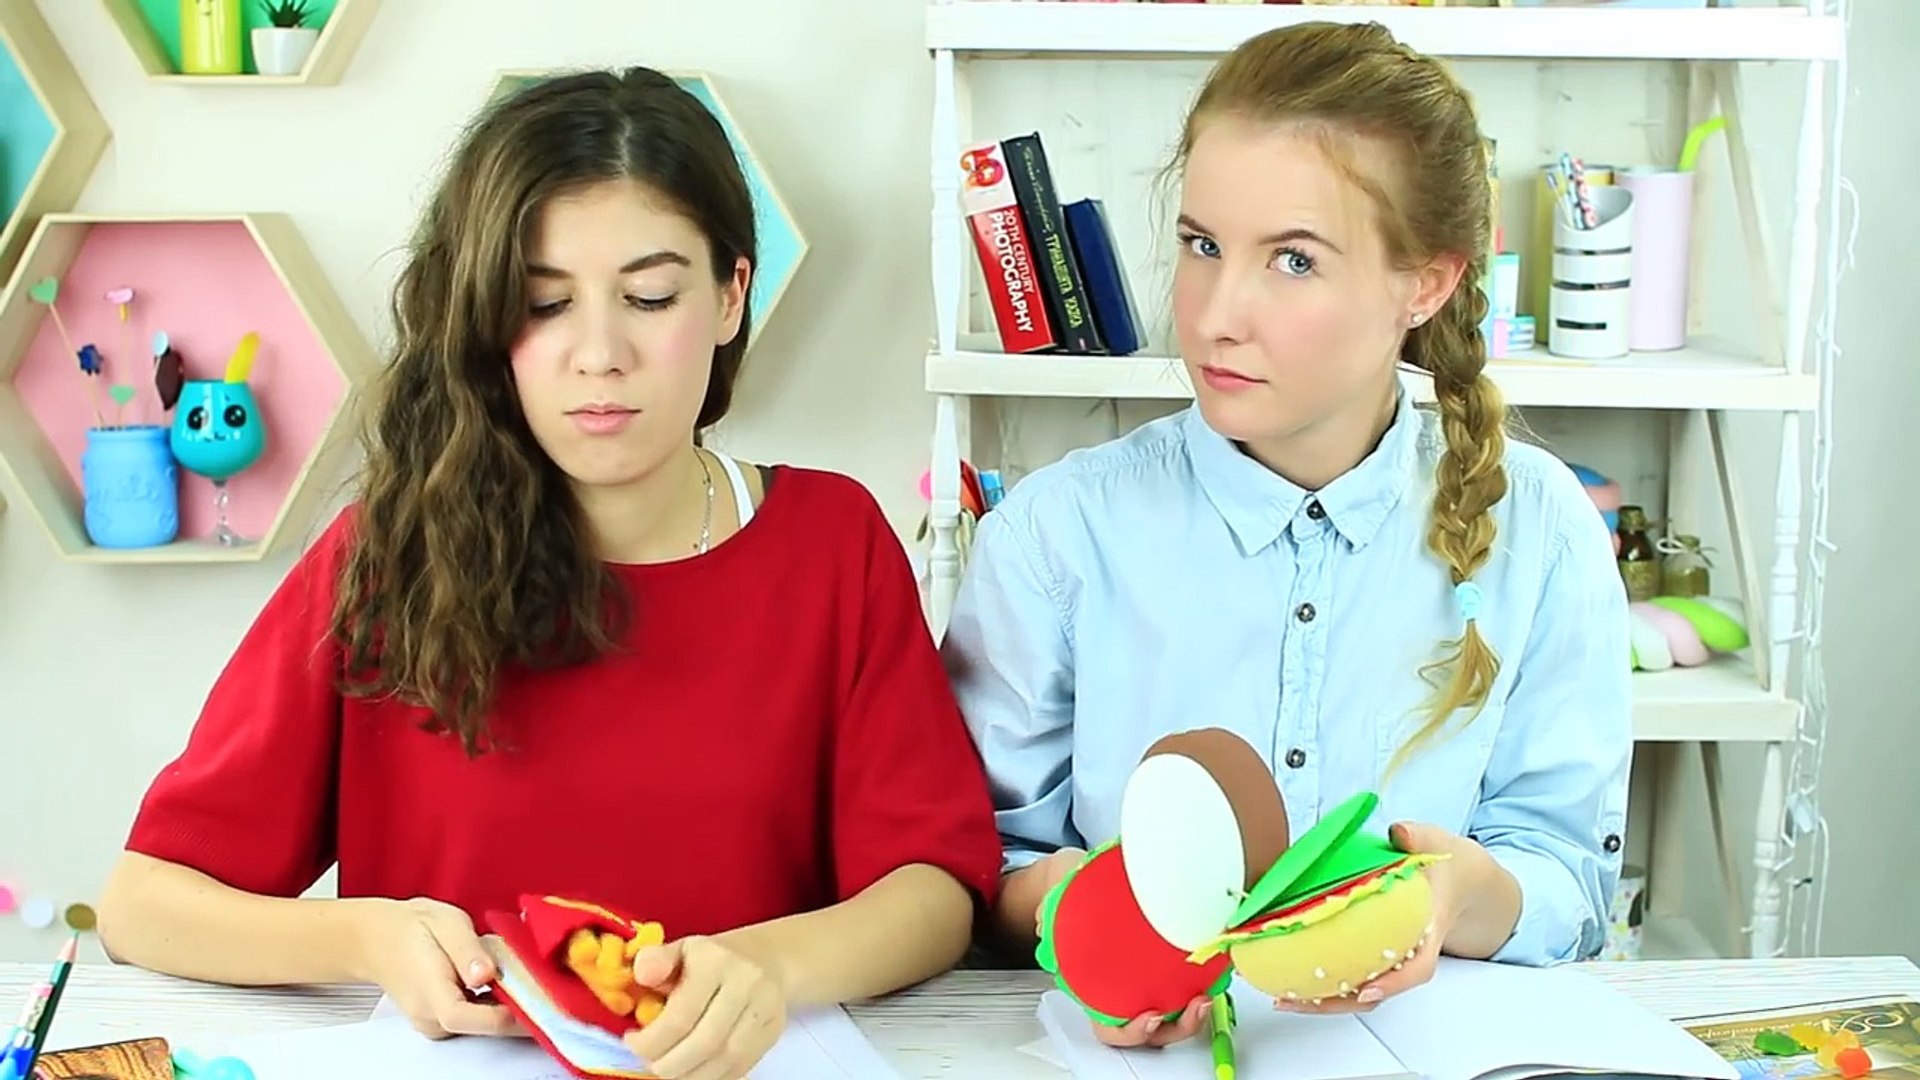 14 Weird Ways To Sneak Food Into Class / Back To School Pranks - video  Dailymotion